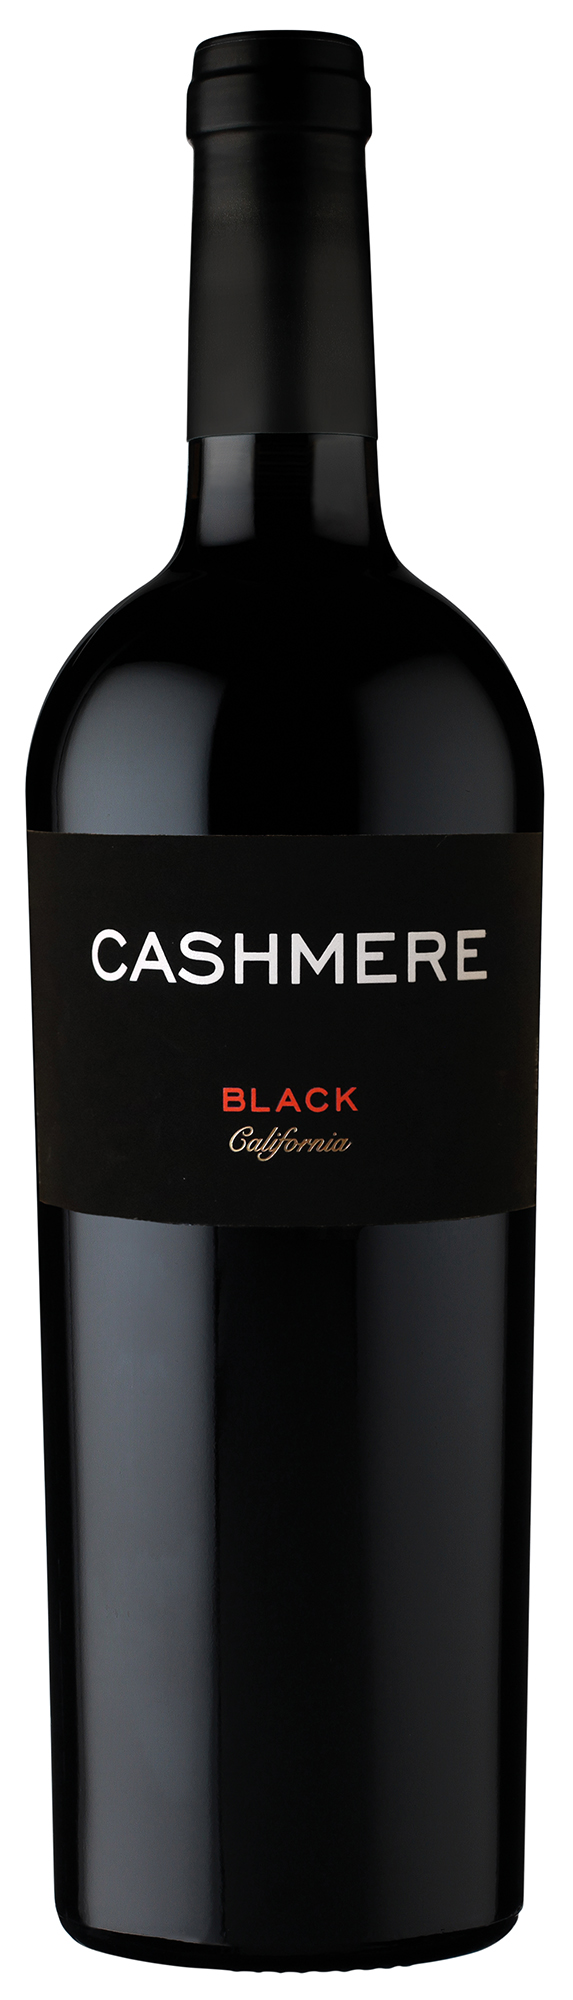  Cashmere Black California Red, Cline Cellars